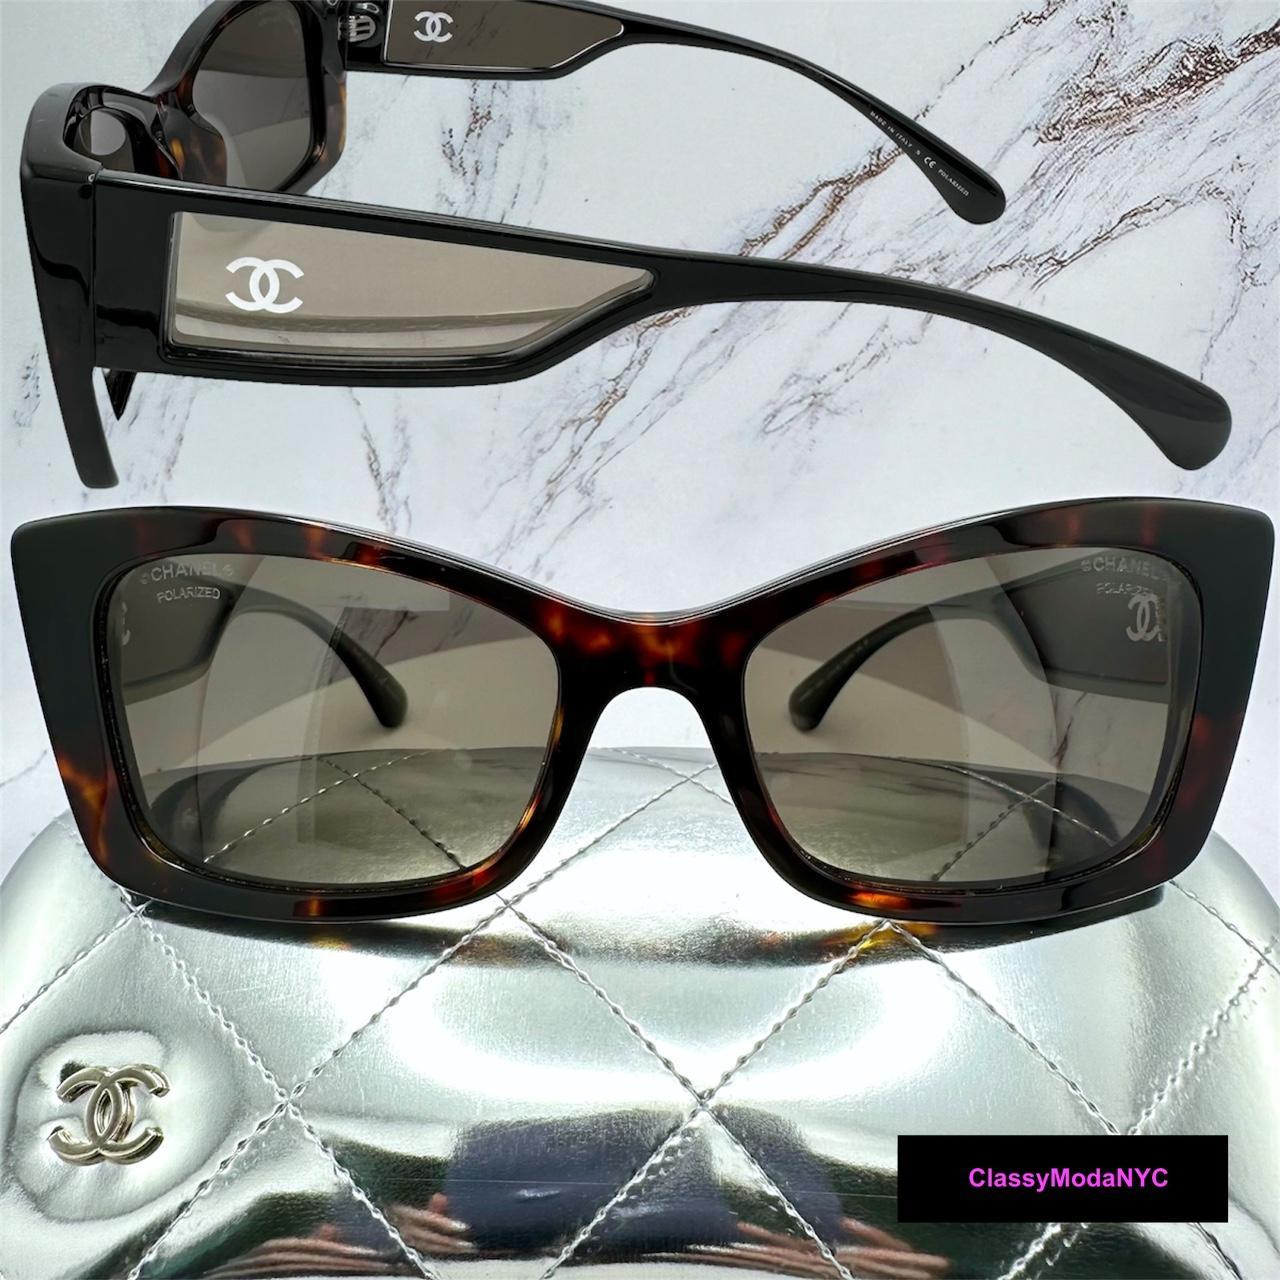 Chanel Men's Sunglasses - Black